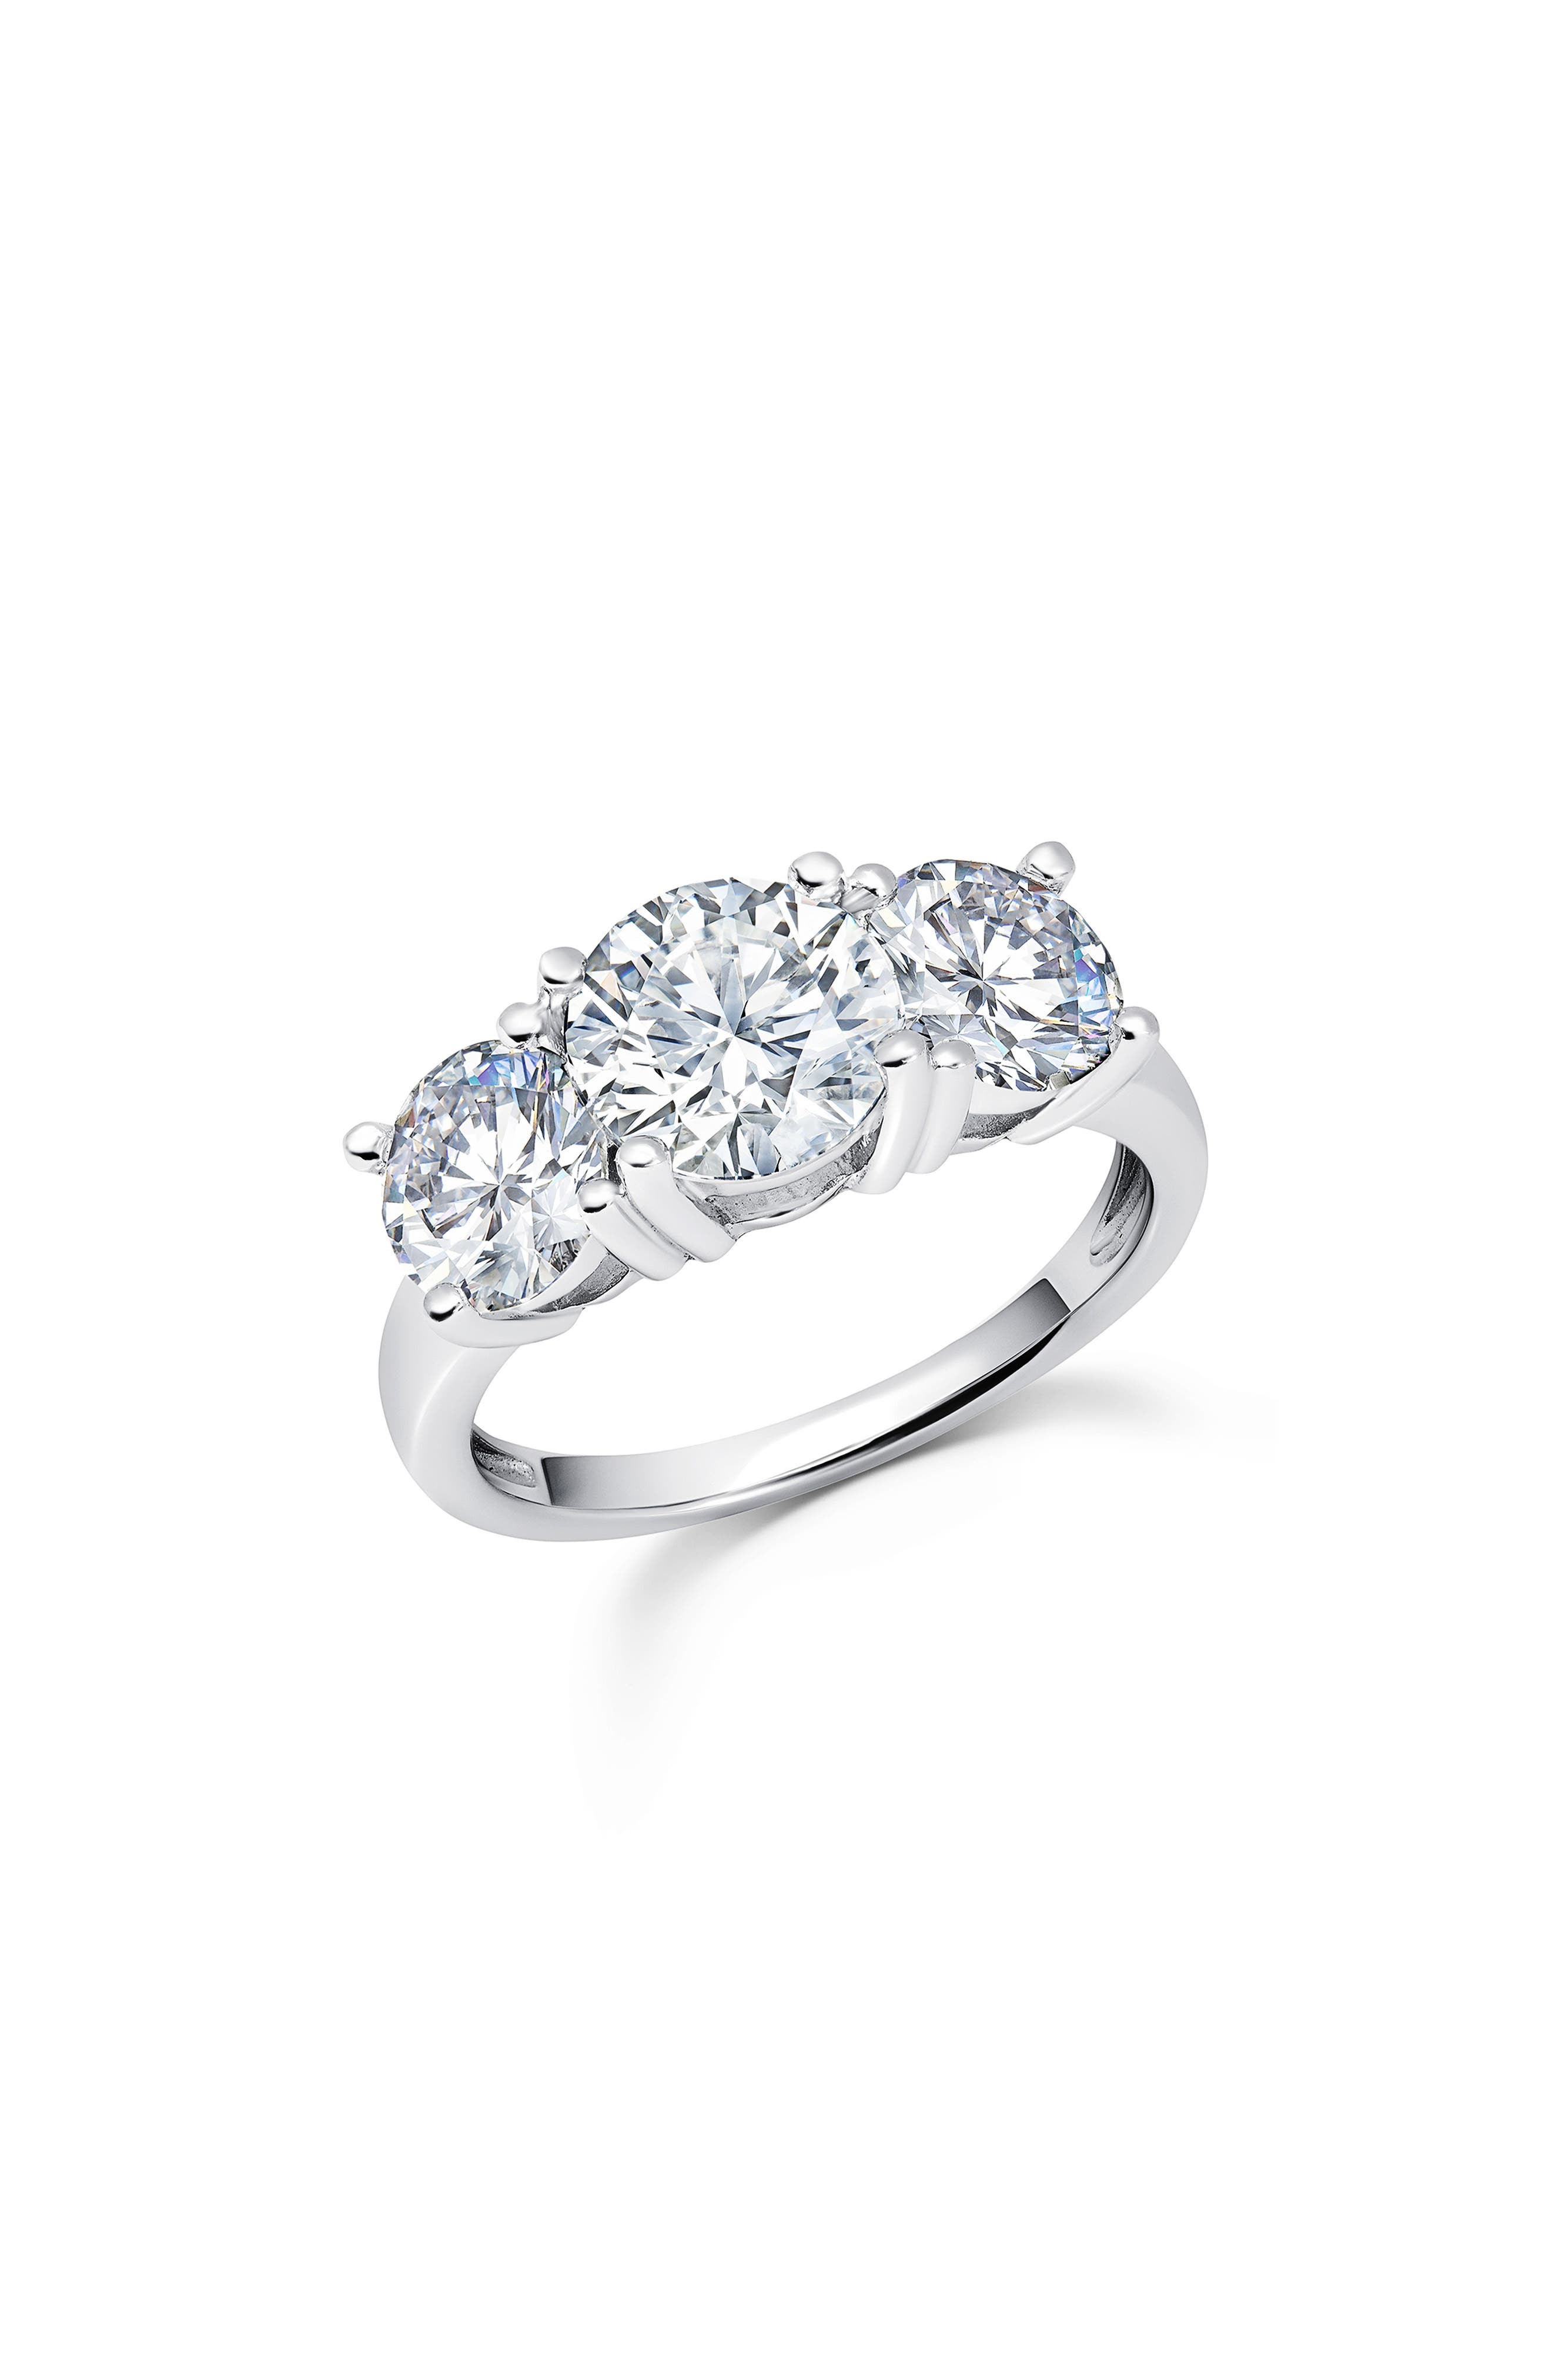 NELSON KENT Womens Romantic Imitation Diamond Heart-Shaped Zircon Ring Silver Plated